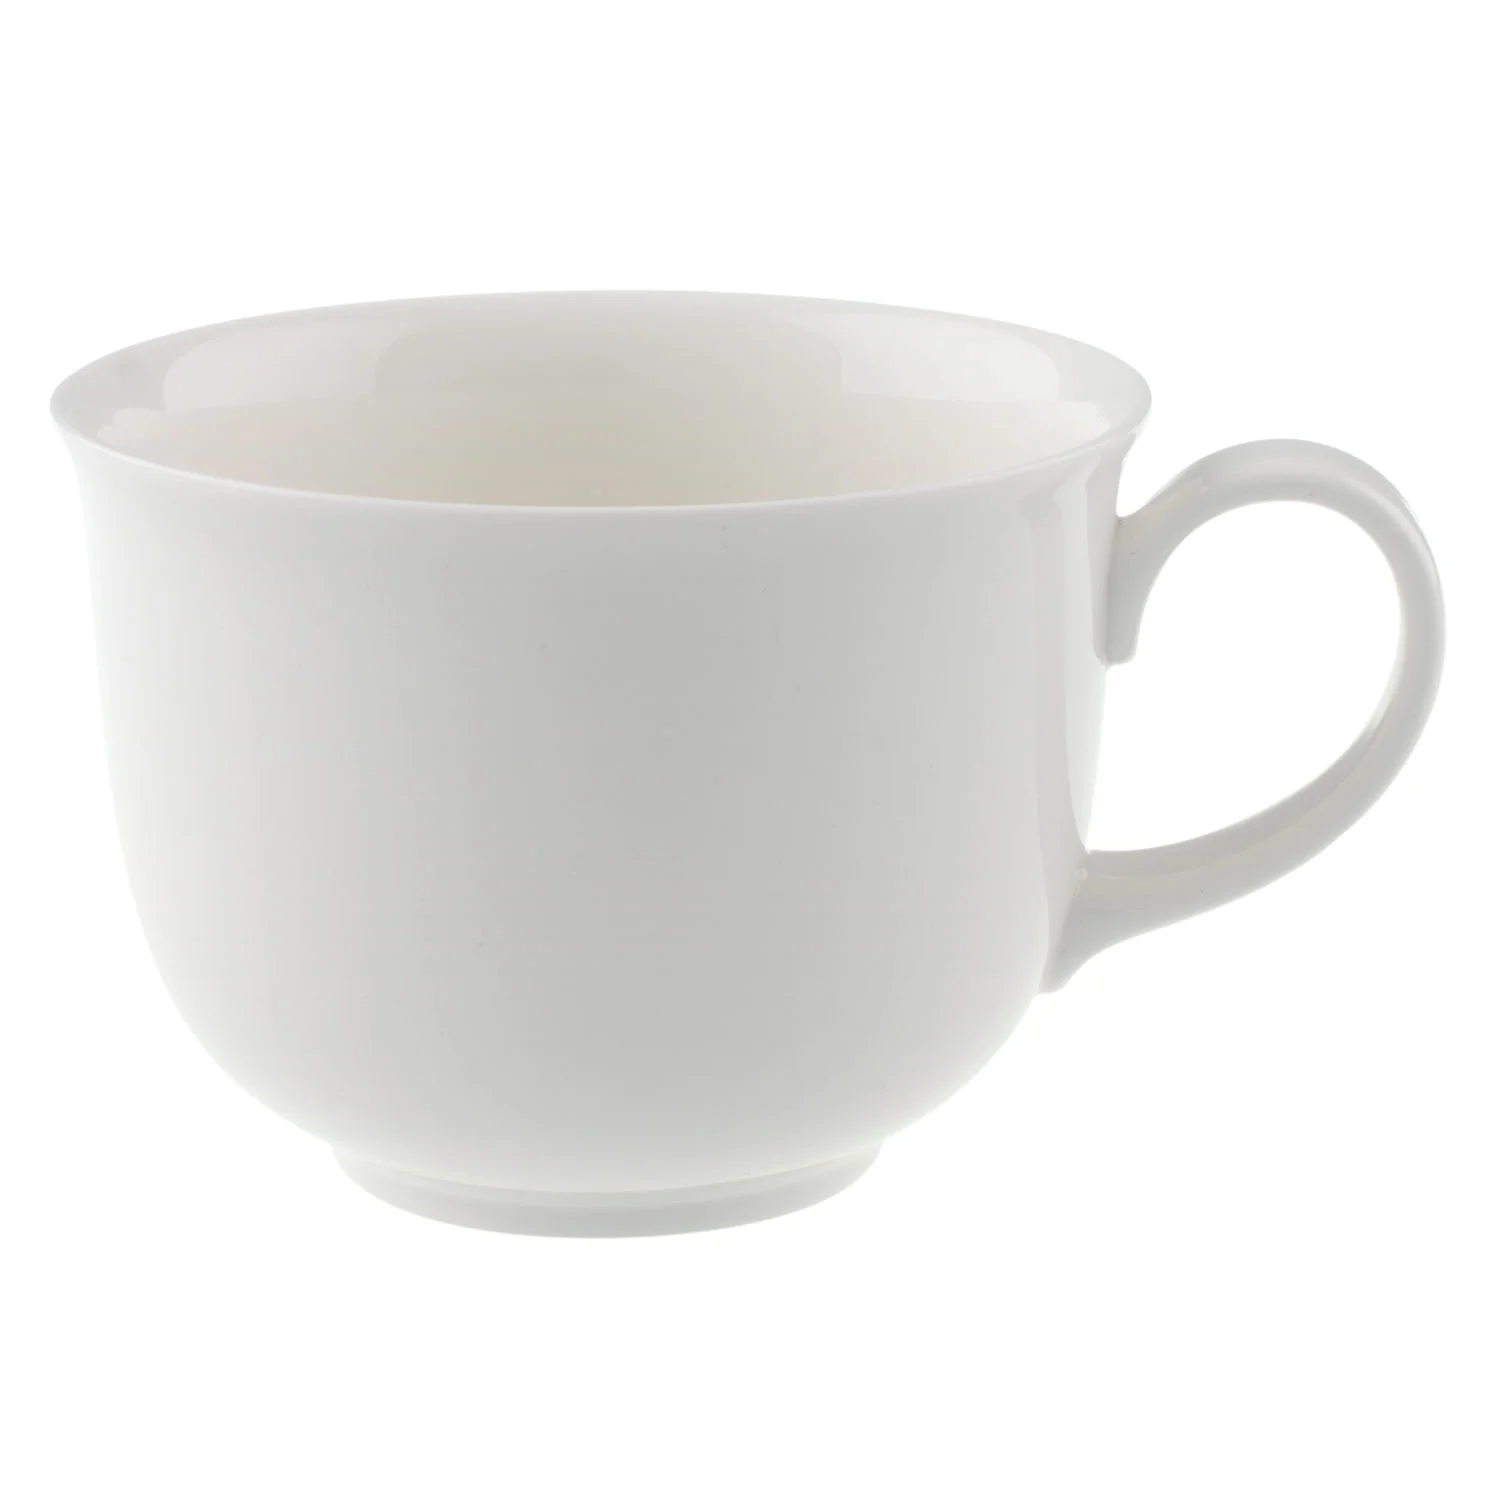 Home Elements Чайно-кофейная чашка 300 мл